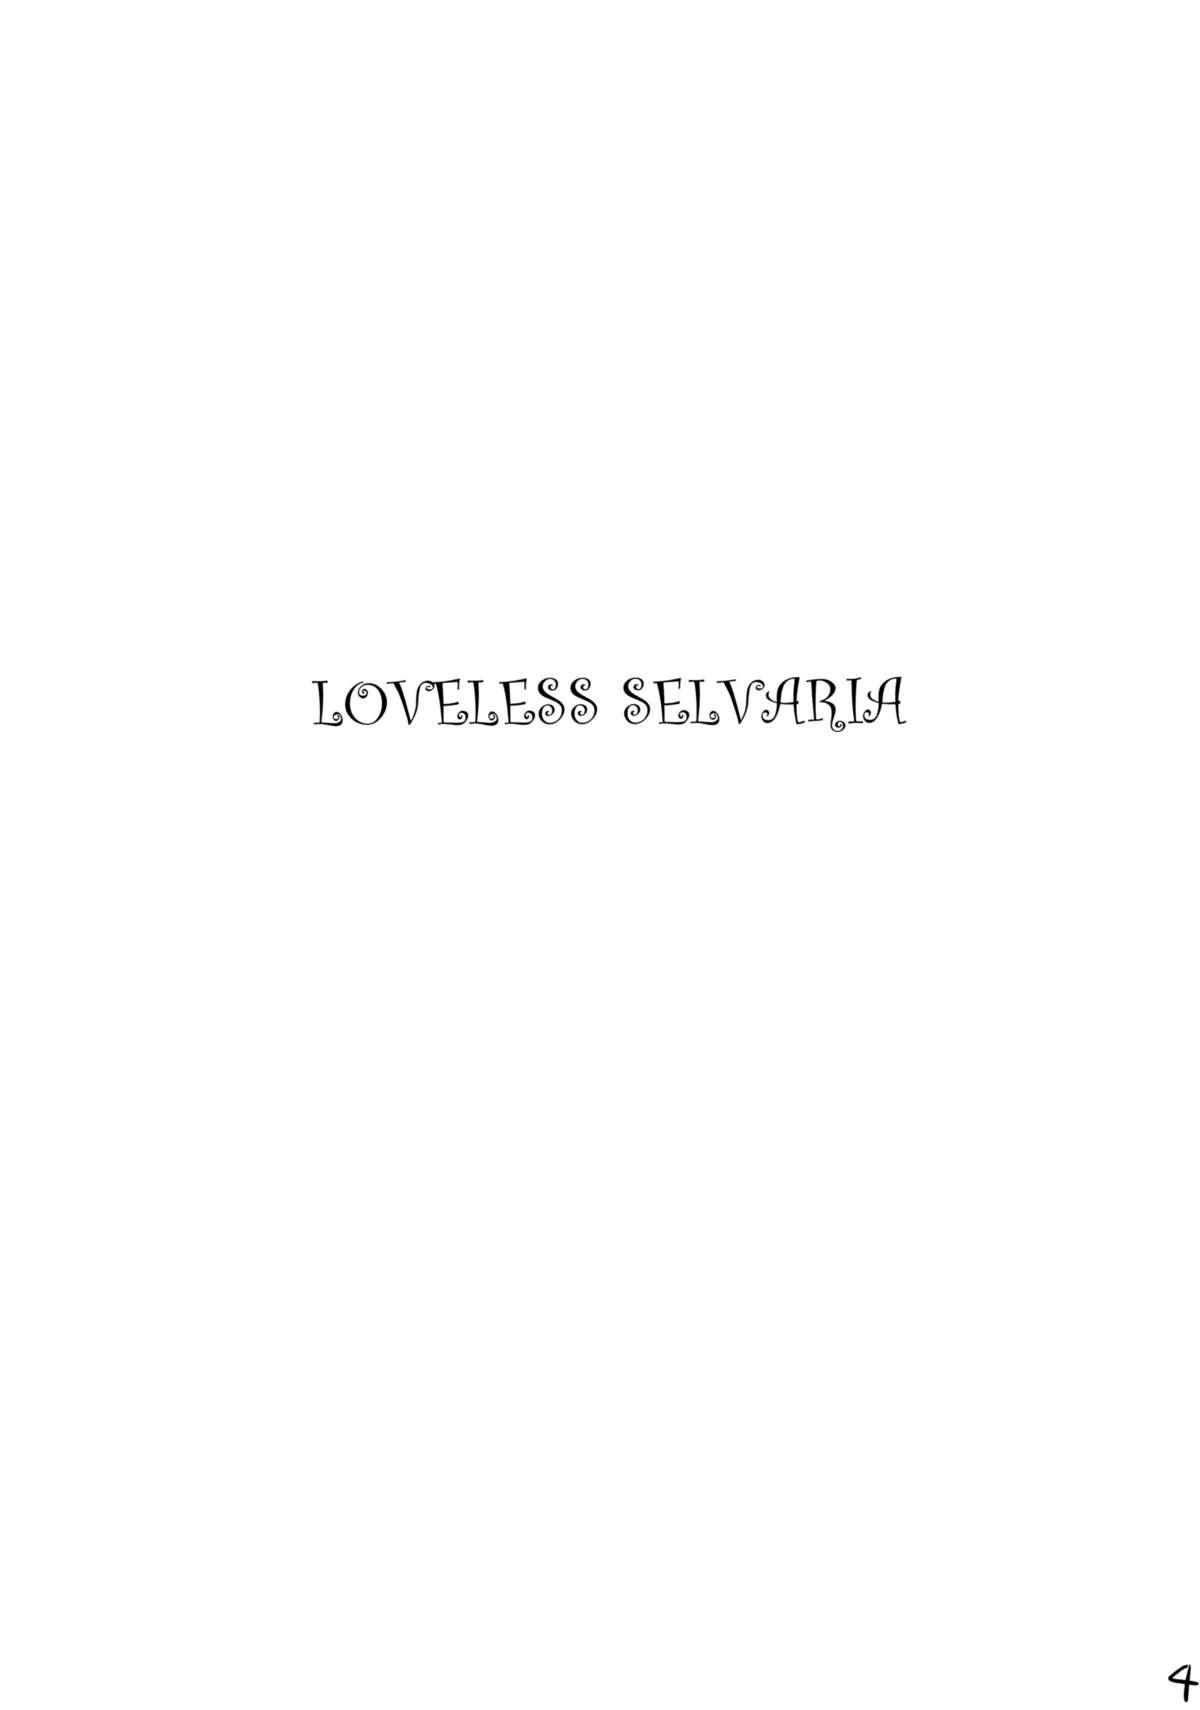 Animation Loveless Selvaria - Valkyria chronicles Masturbacion - Page 3